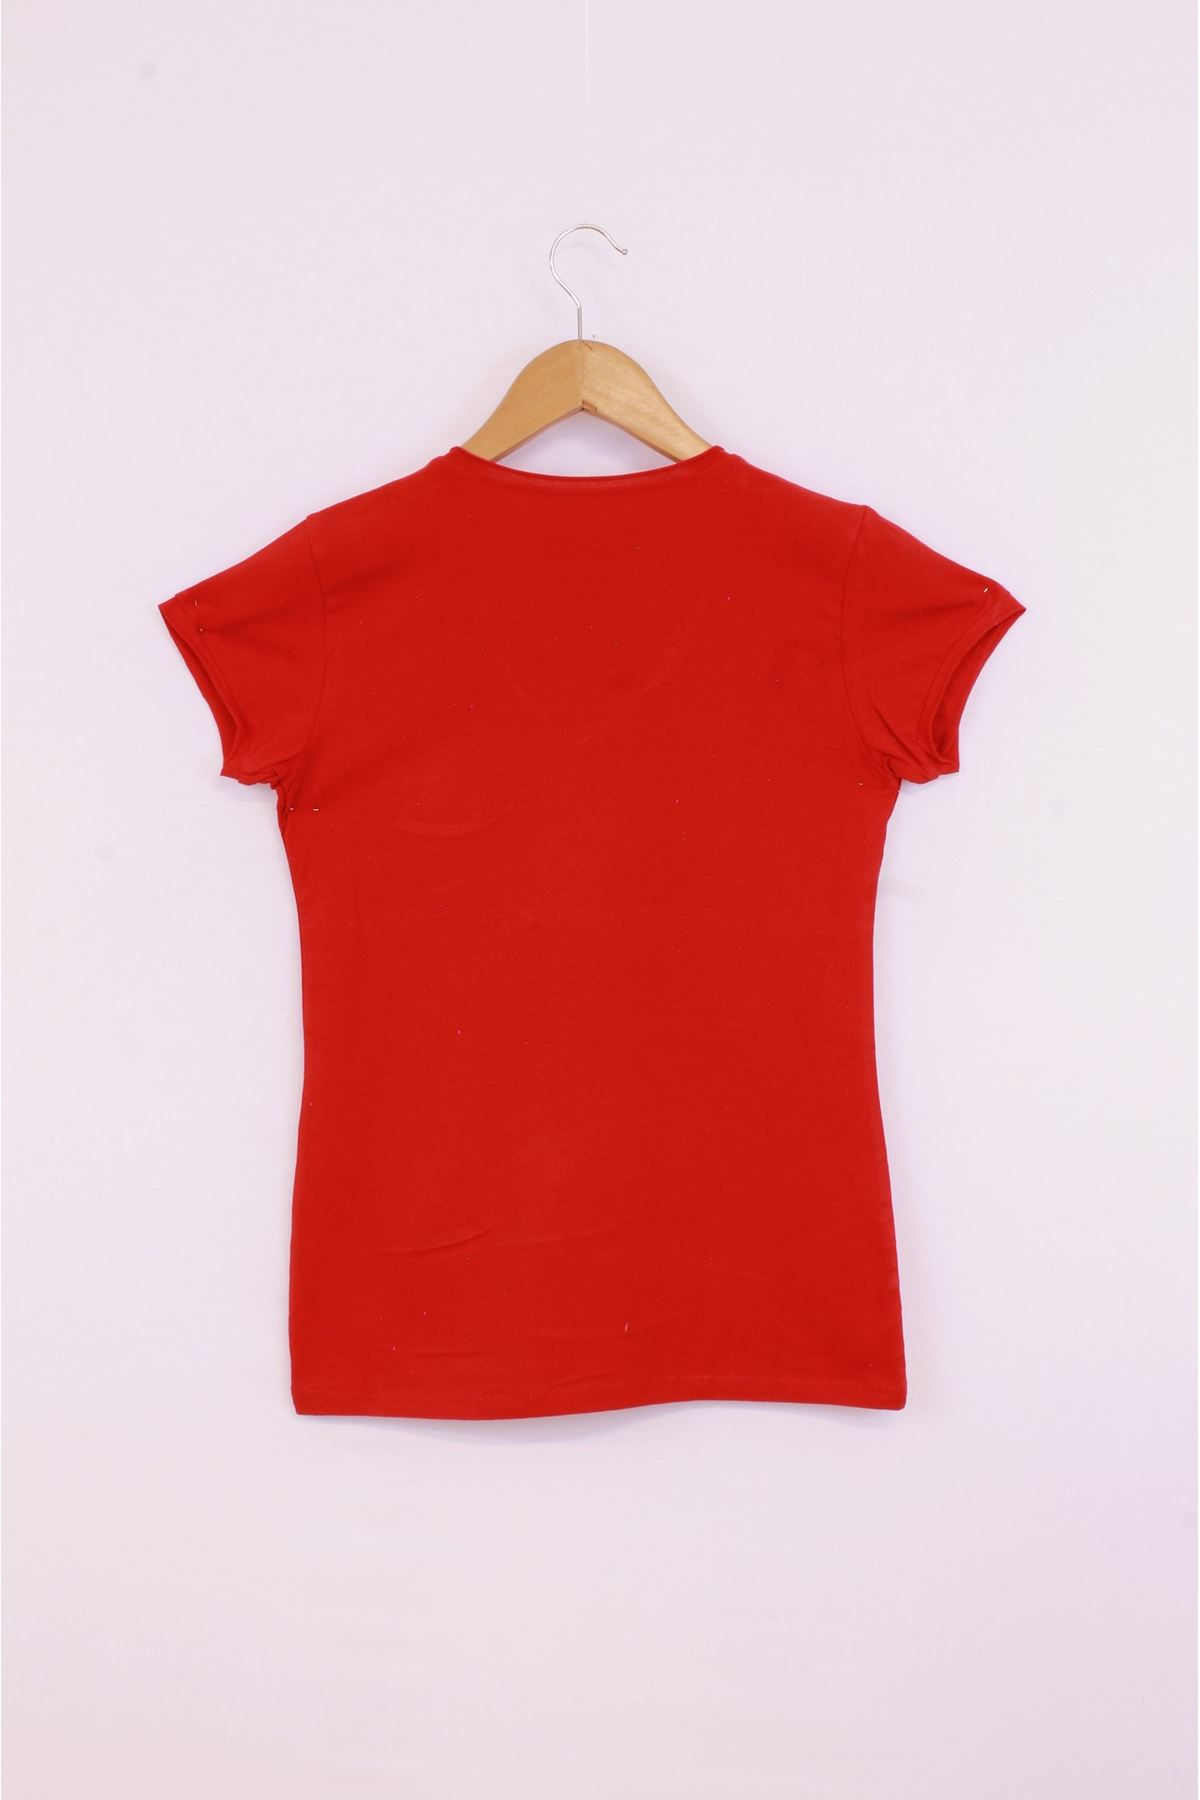 Giyinsen Kadın Kırmızı Tişört - 23YL71595004